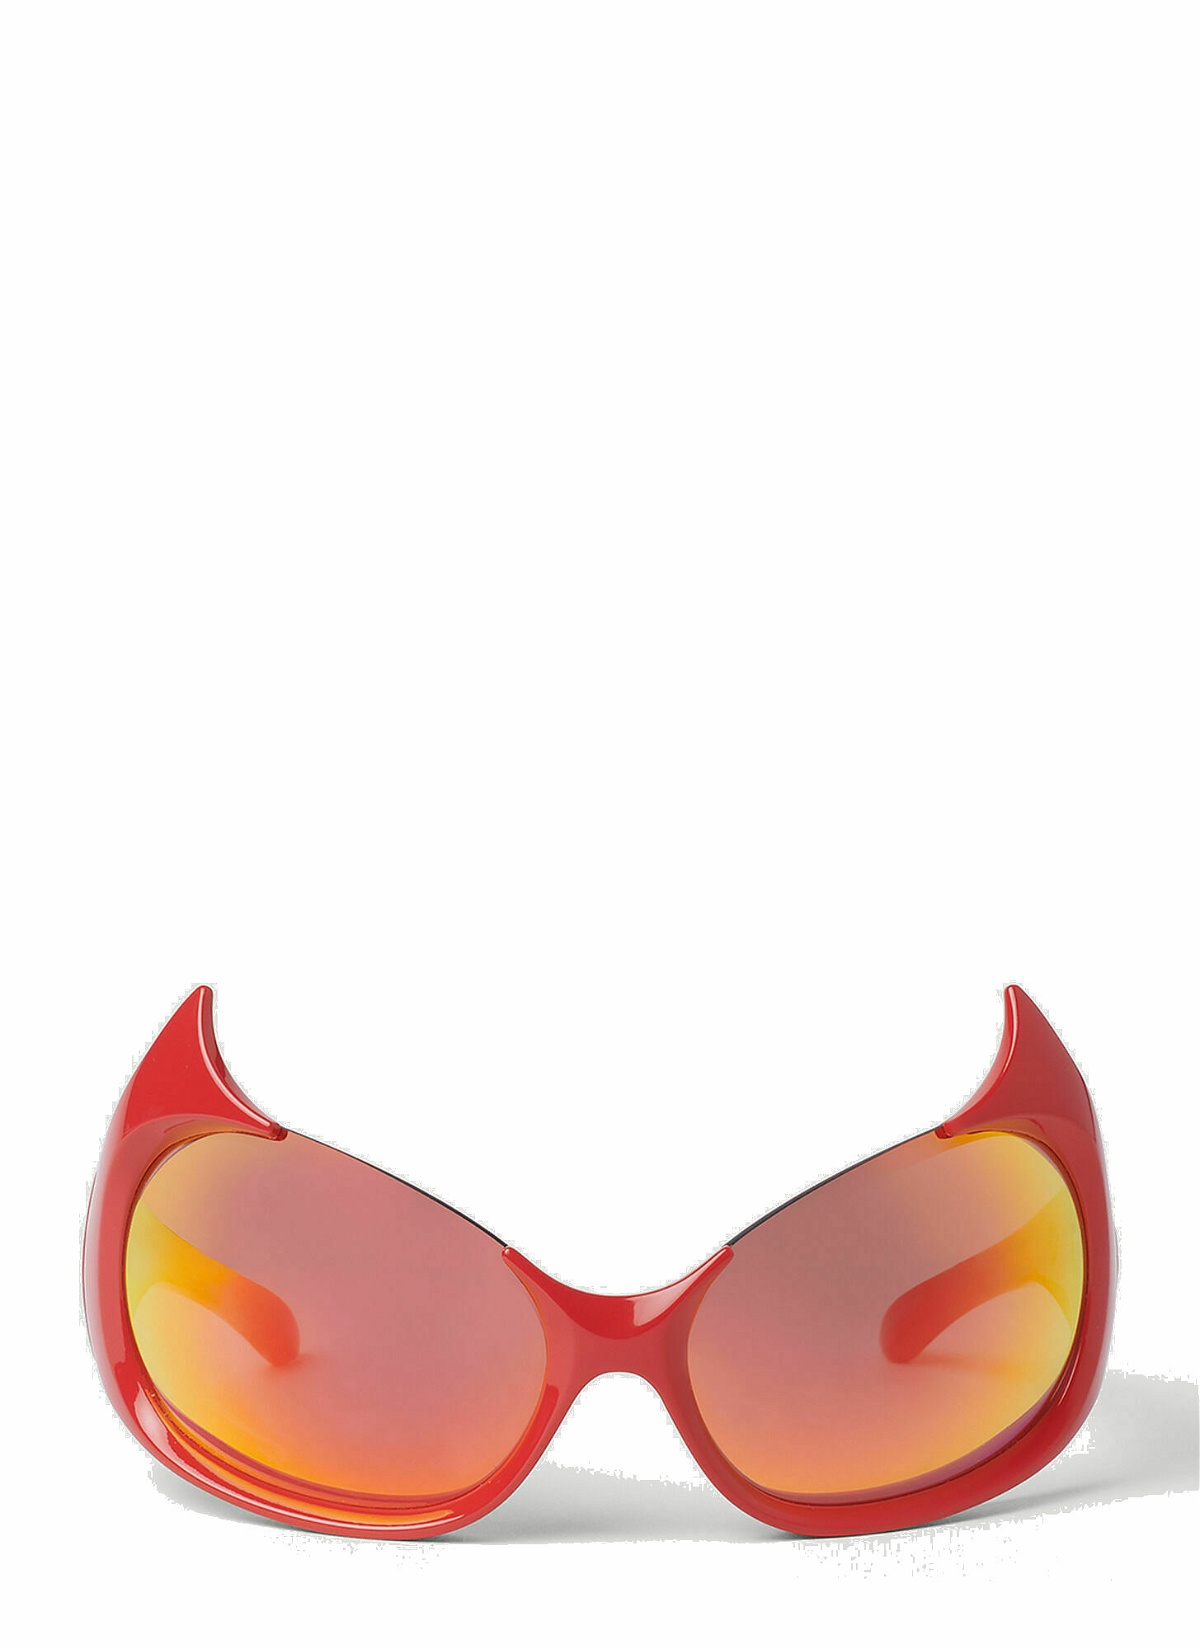 Balenciaga - Gotham Cat Sunglasses in Red Balenciaga